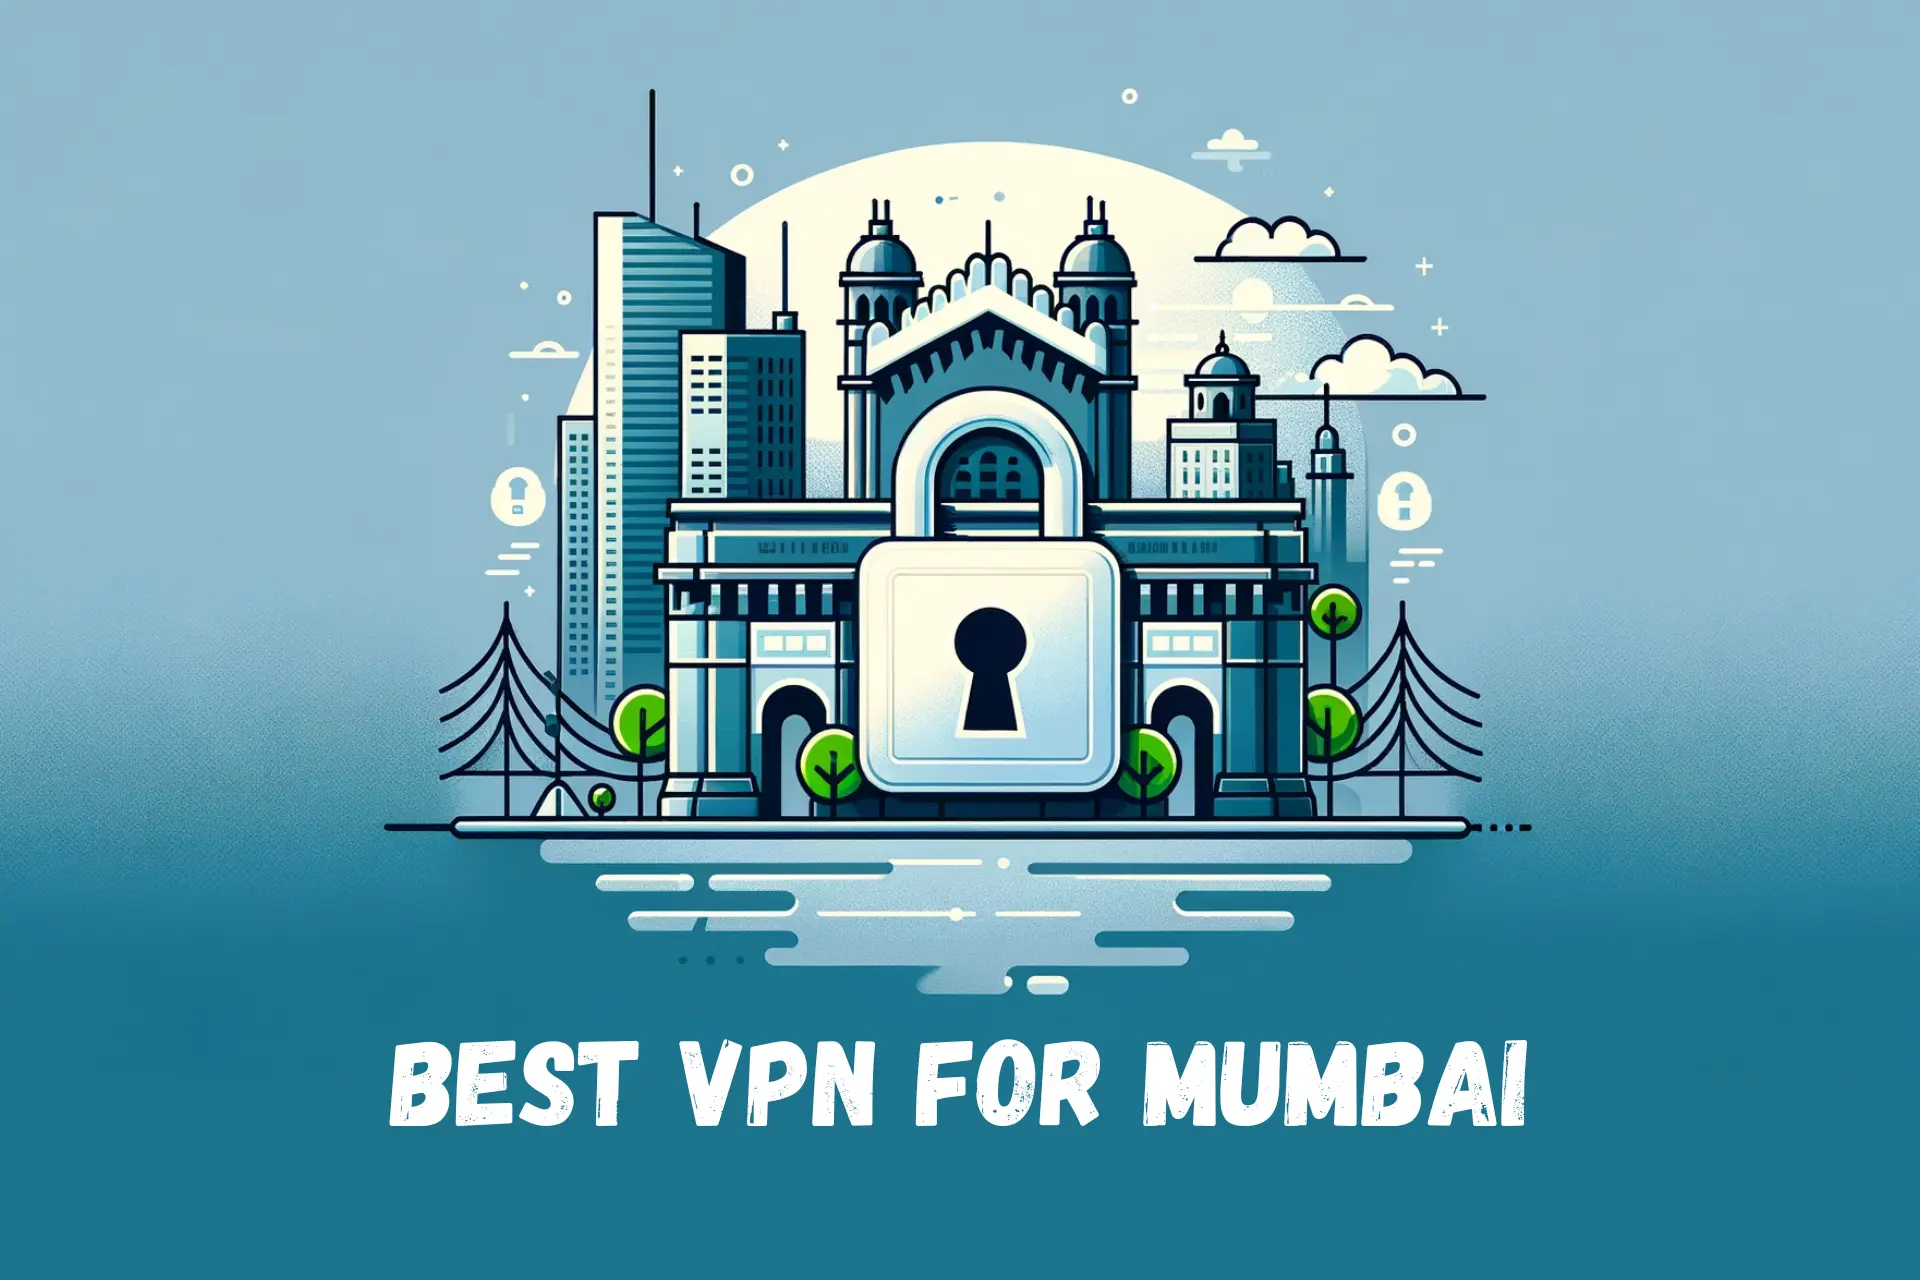 Best VPN for Mumbai – 5 Privacy-Focused Options